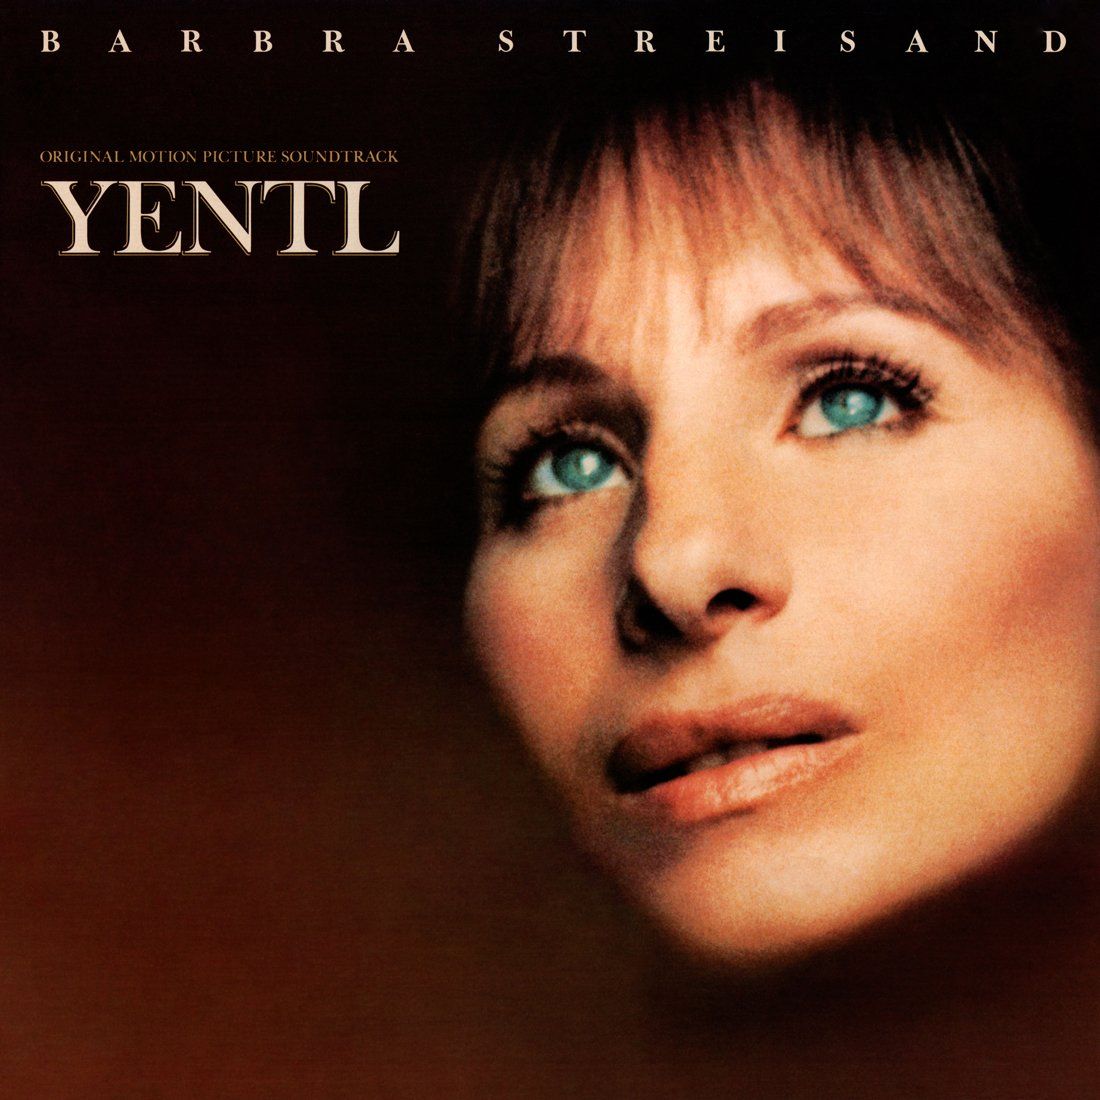 Yentl soundtrack original album cover. Scan by Kevin Schlenker.